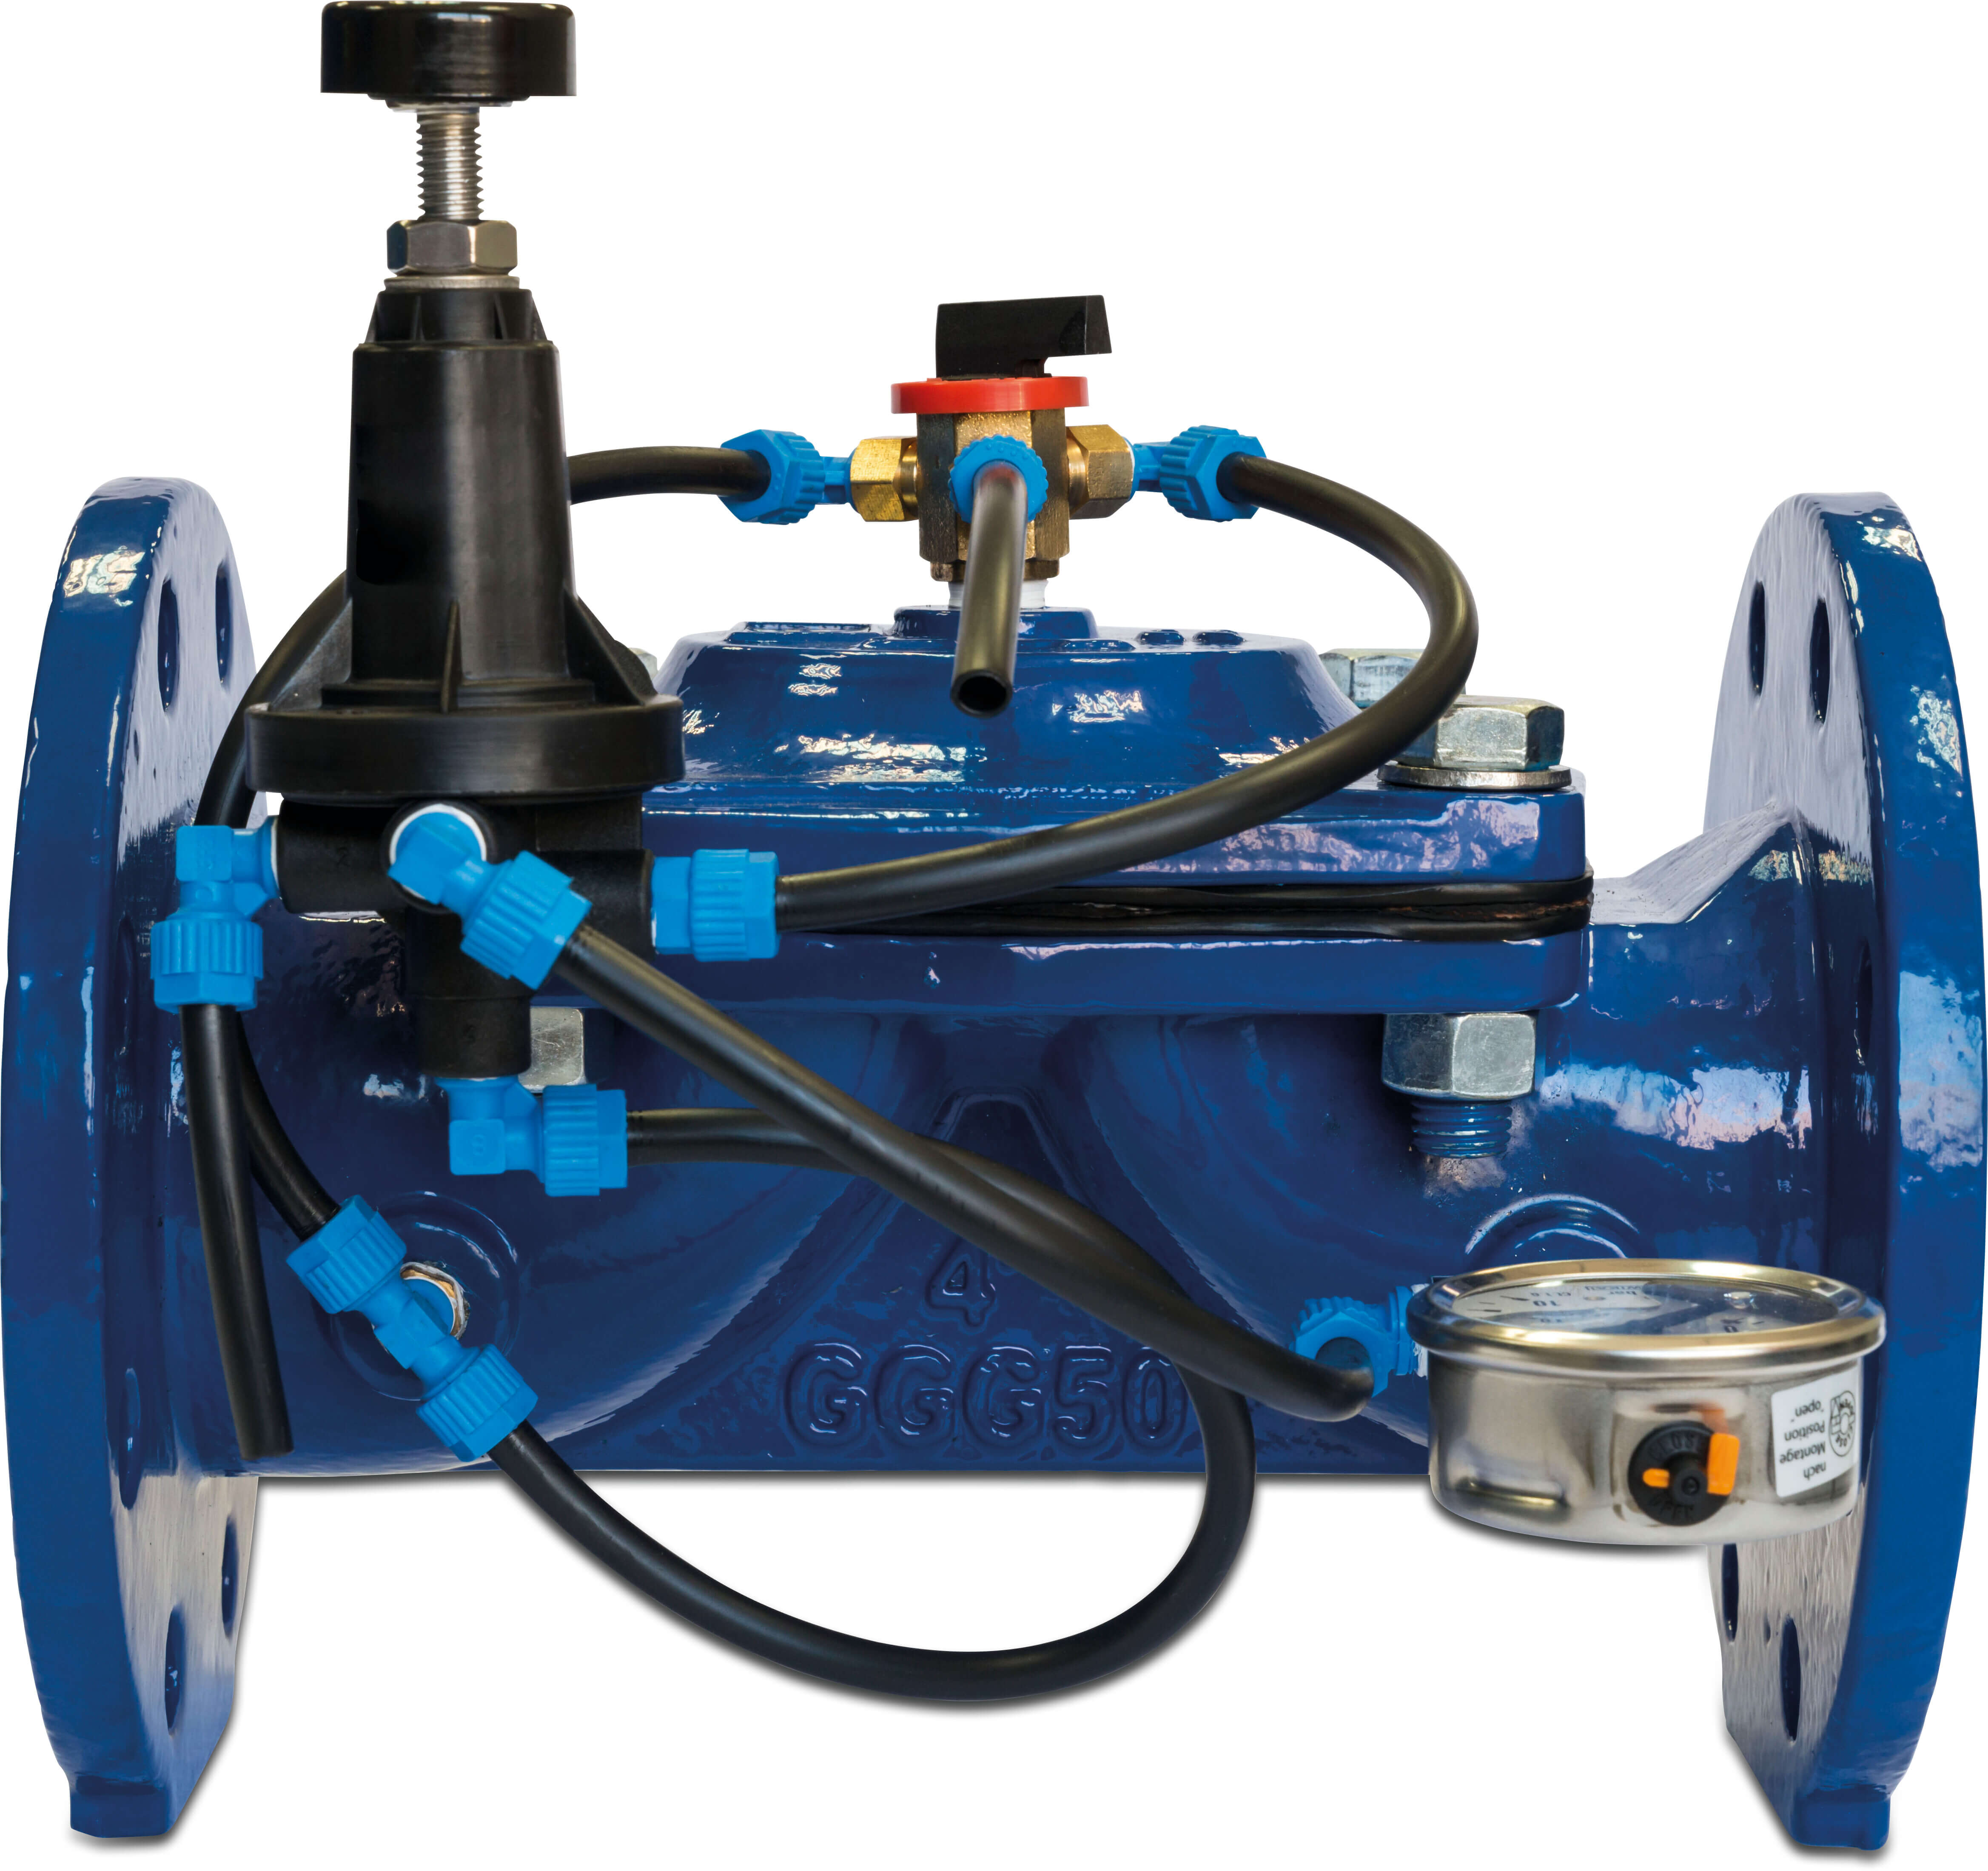 Azud Pressure reducing hydraulic valve cast iron GG 25 epoxy coating 3" female thread 16bar blue